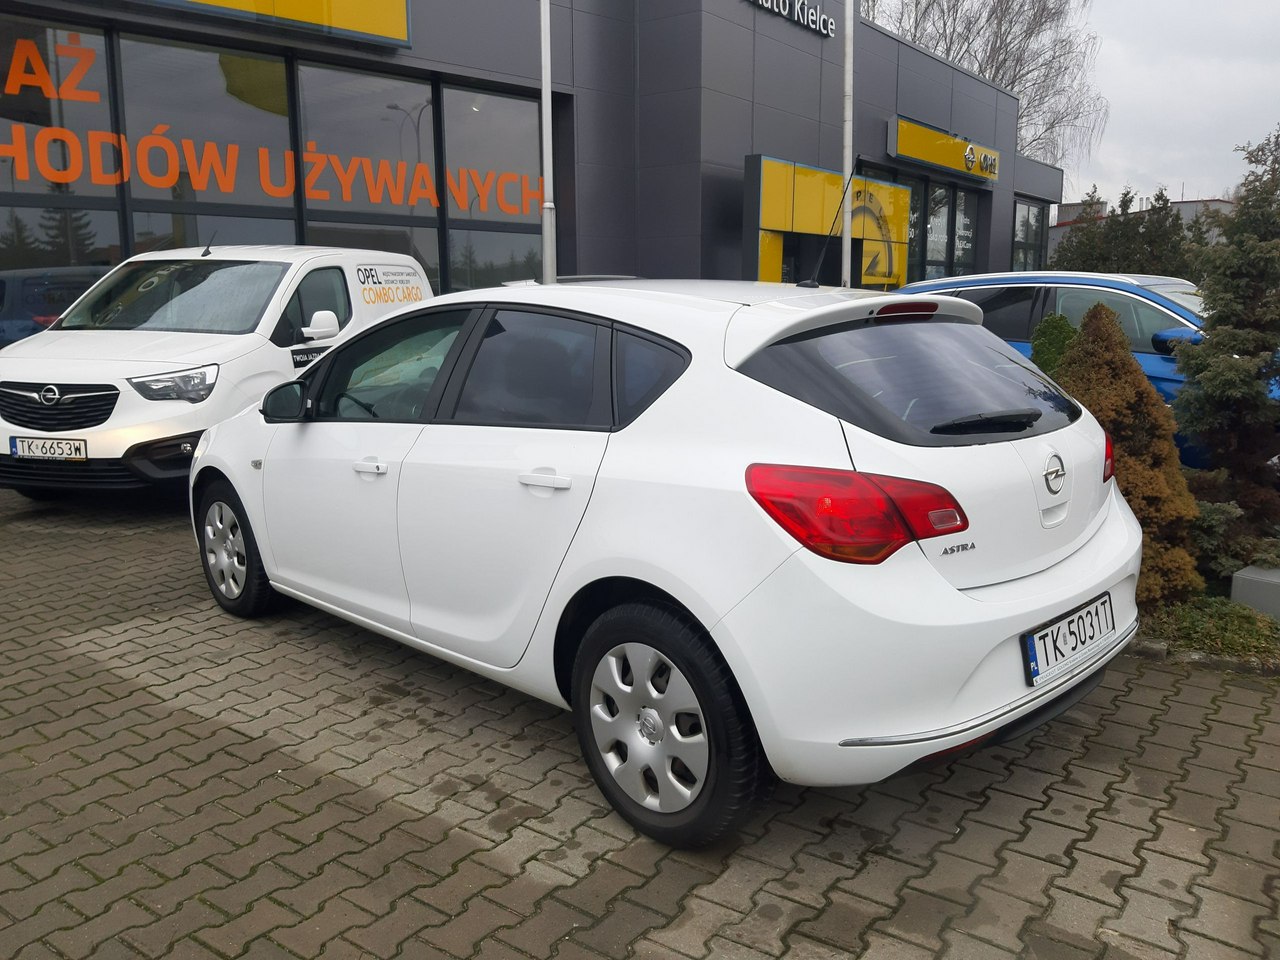 Opel Astra 115 KM, rok produkcji 2013, oferta AKL16FTQZ